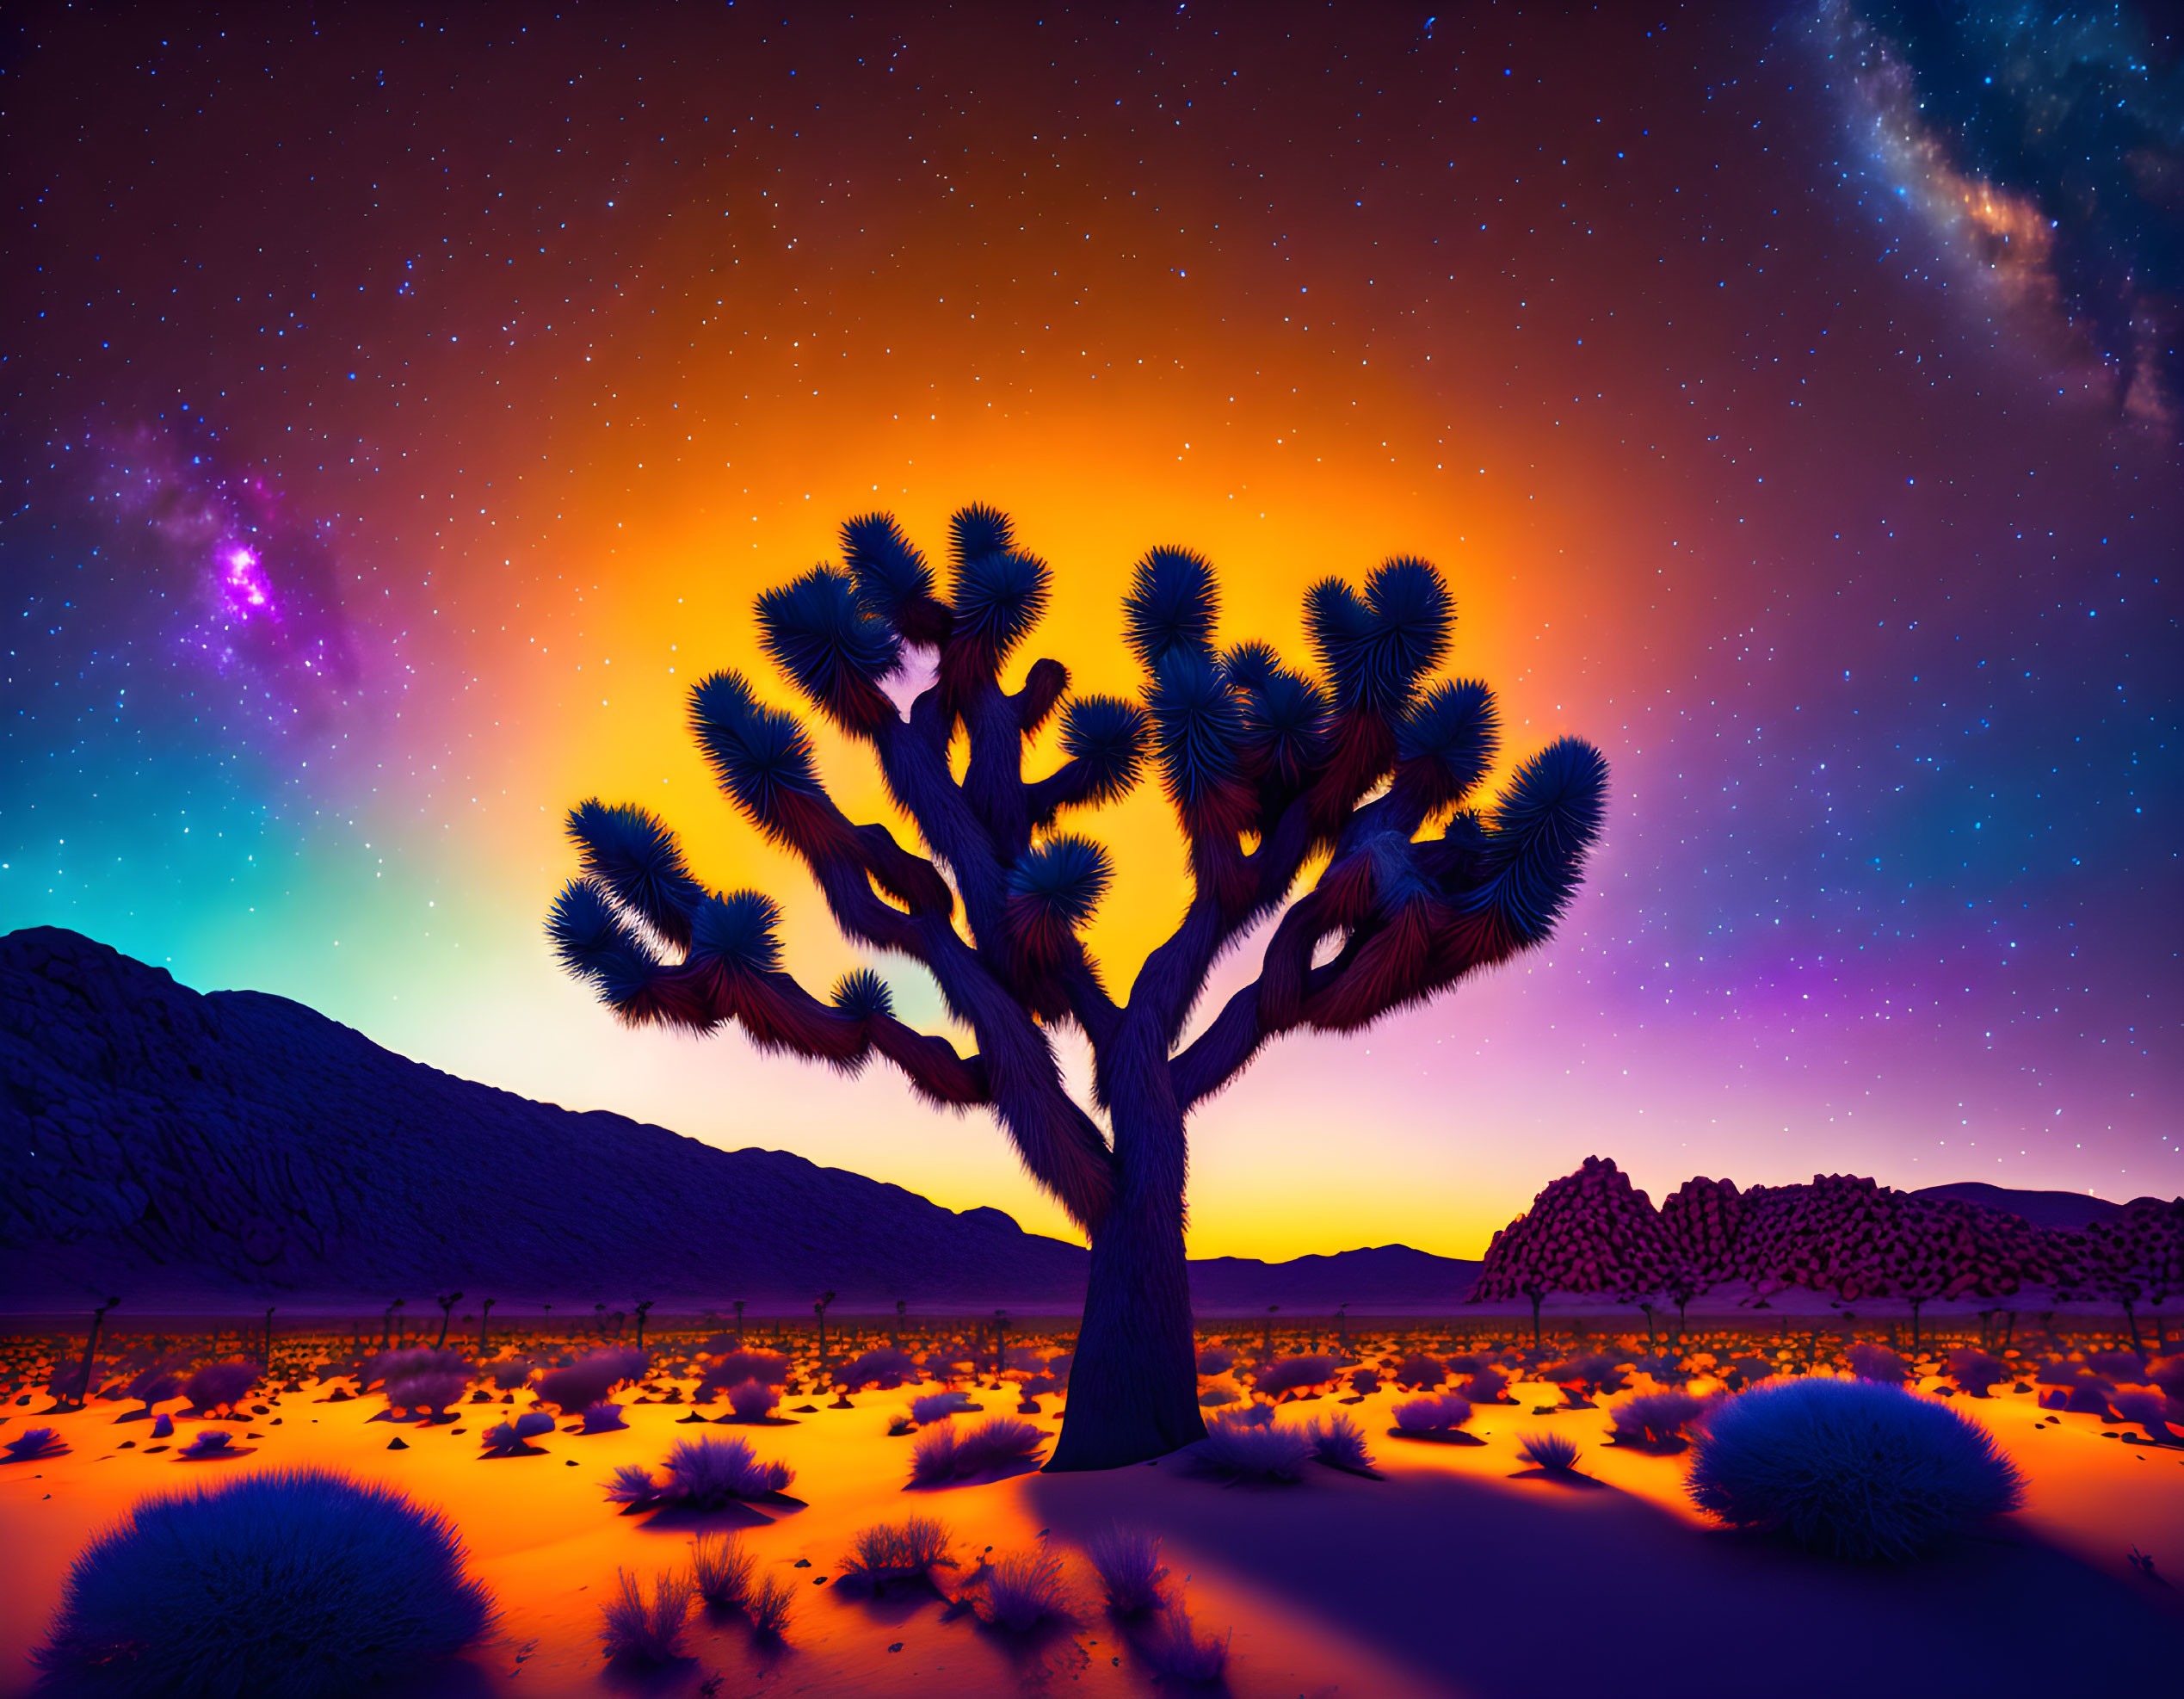 Starry night sky over desert landscape with Joshua Tree.